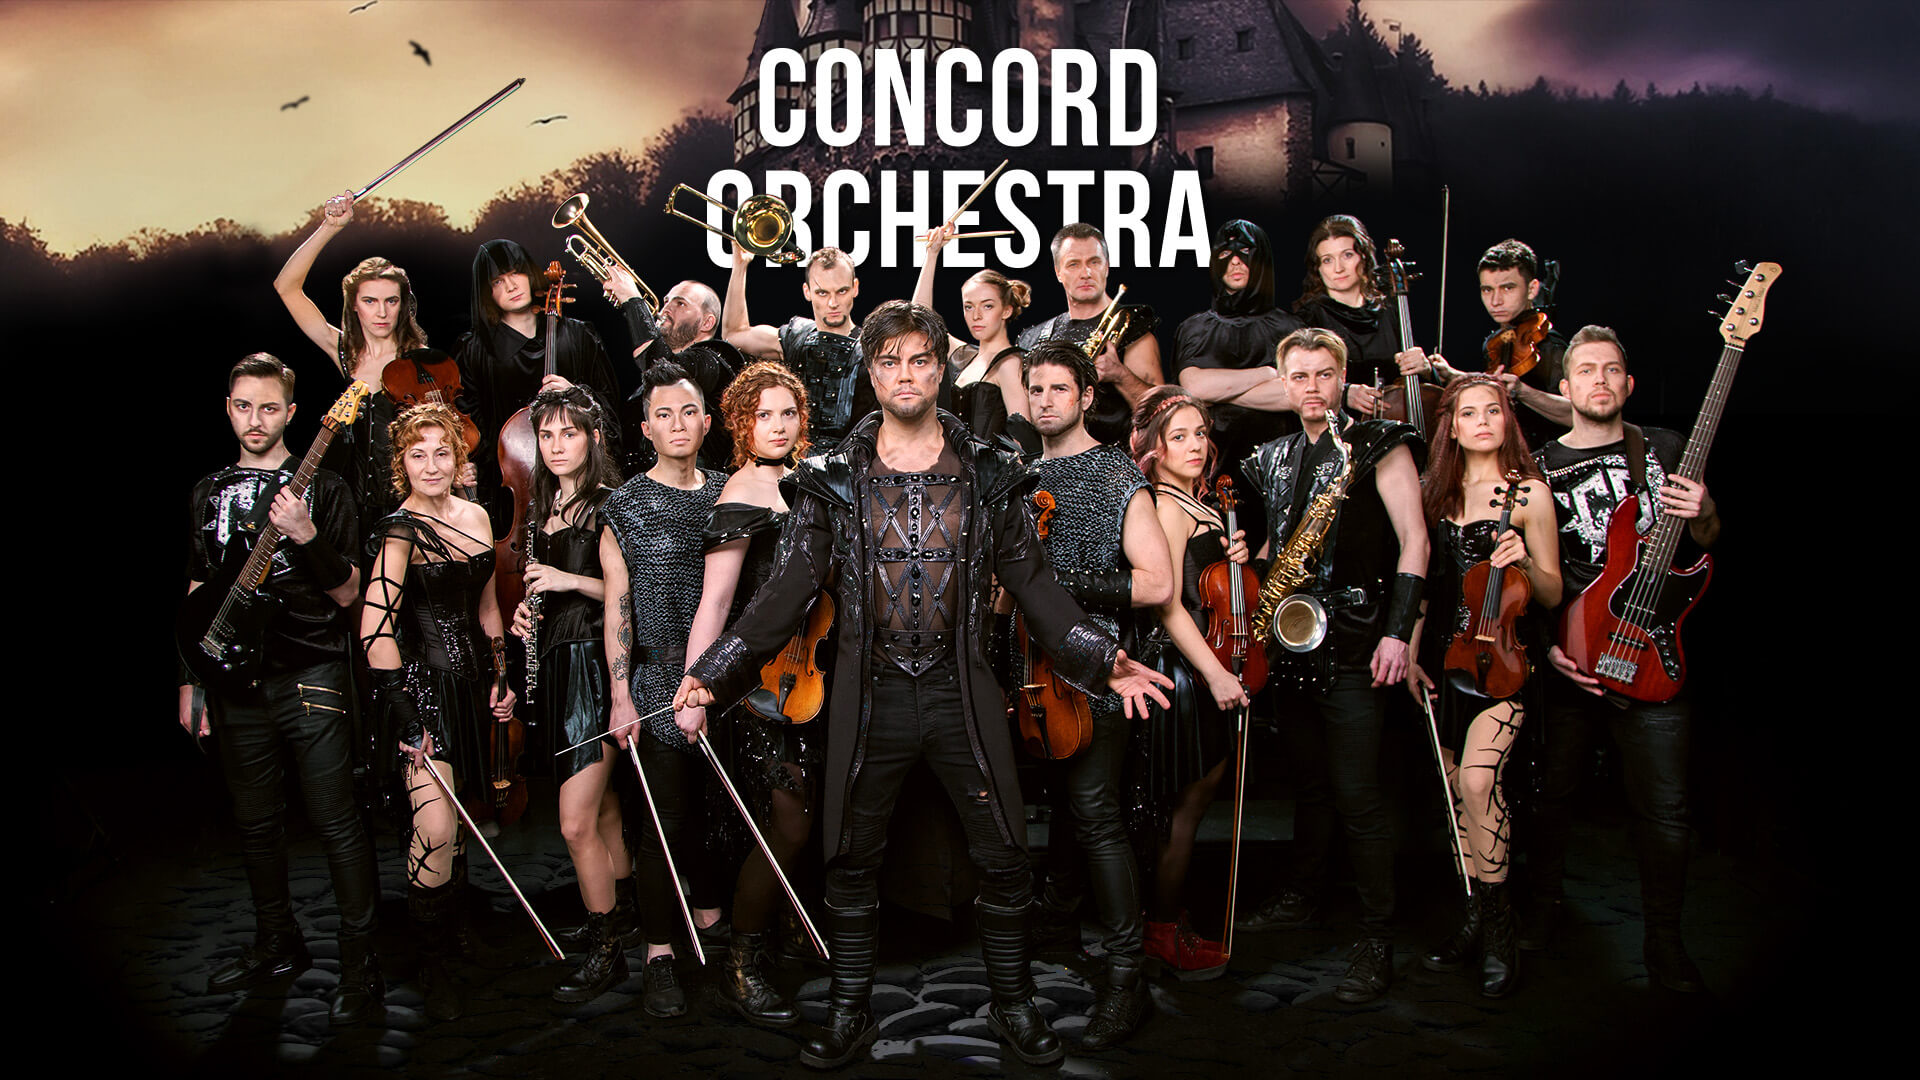 Concord-orchestra-Vlastelin-tmy-0.jpg